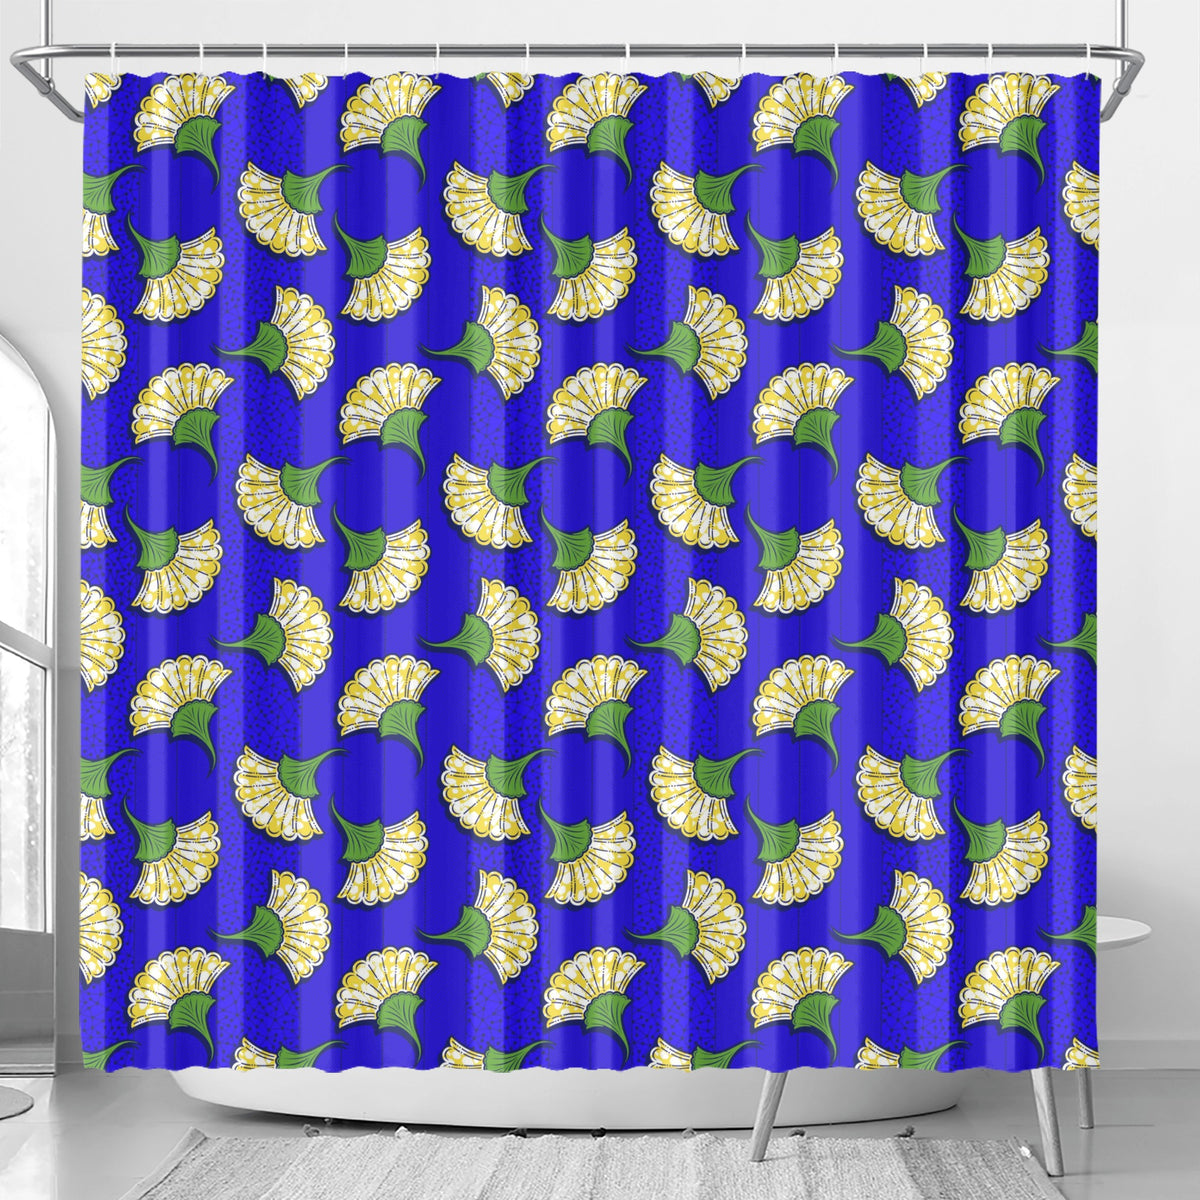 Shower Curtain Popcustoms